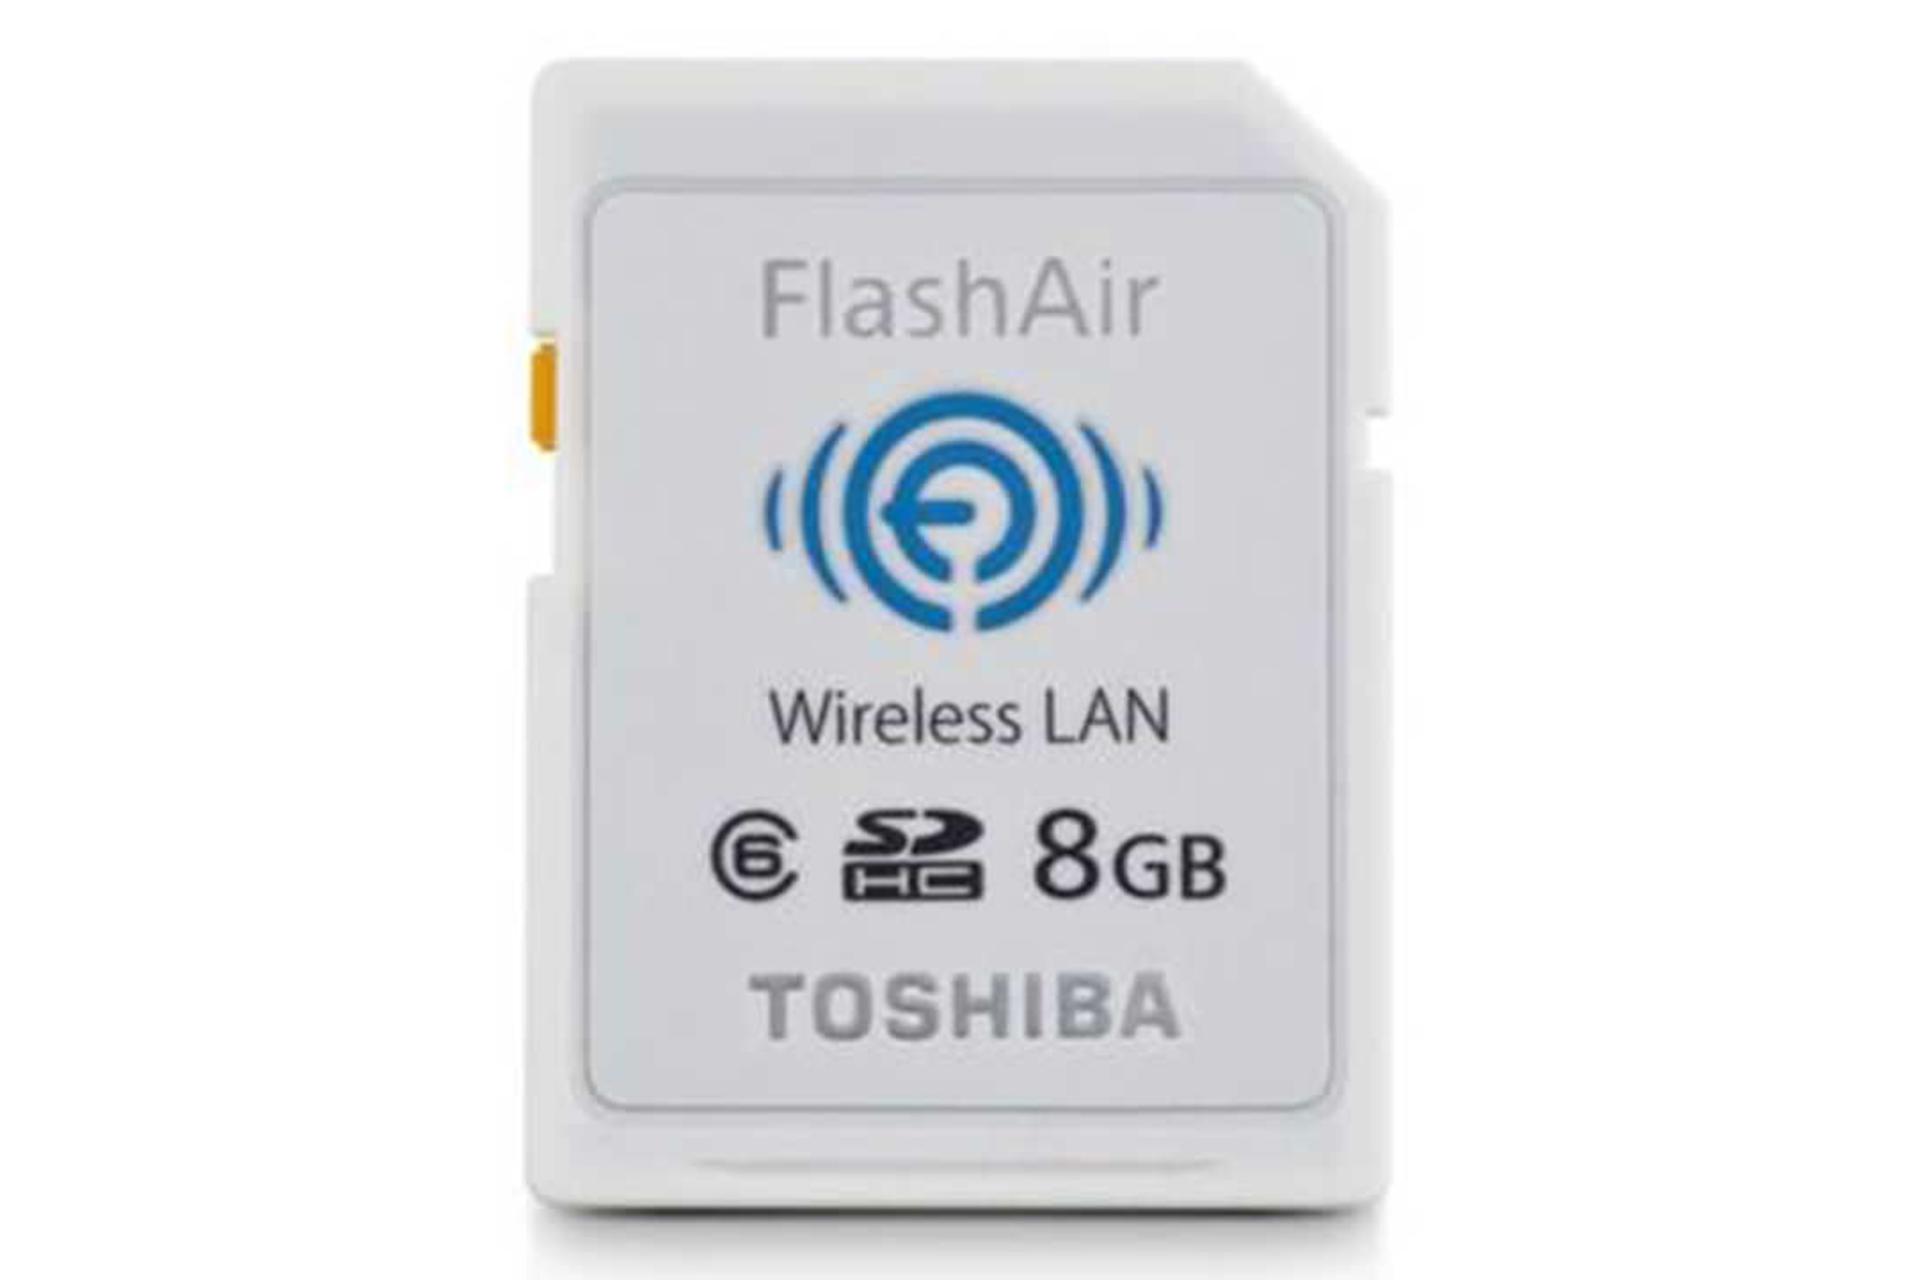 Toshiba Flash Air W-02 SD-R008GR7AL01 SDHC Class 6 8GB